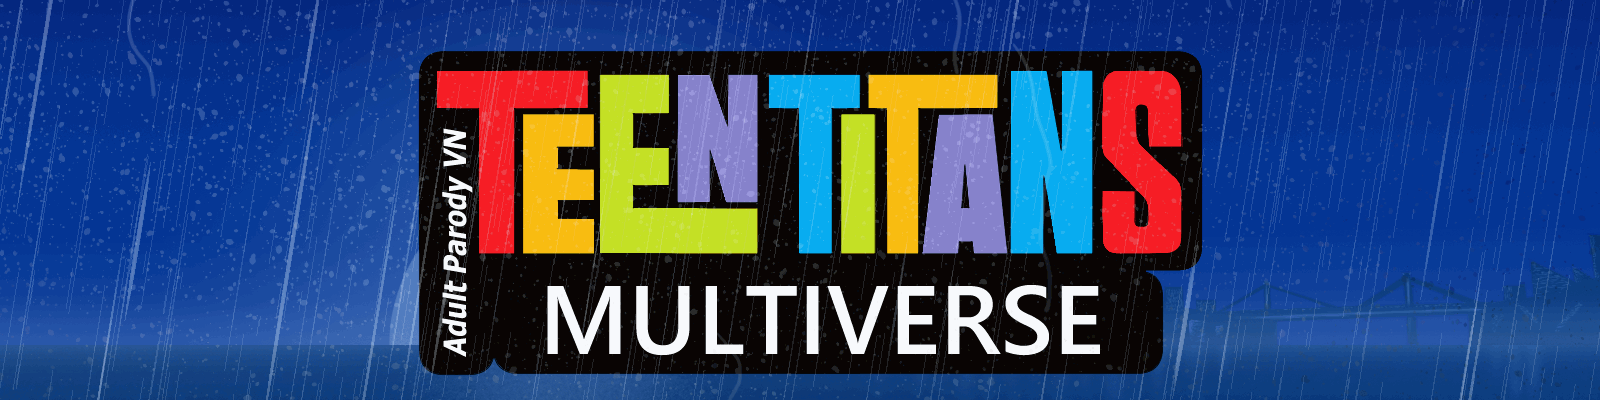 Teen Titans Multiverse Banner